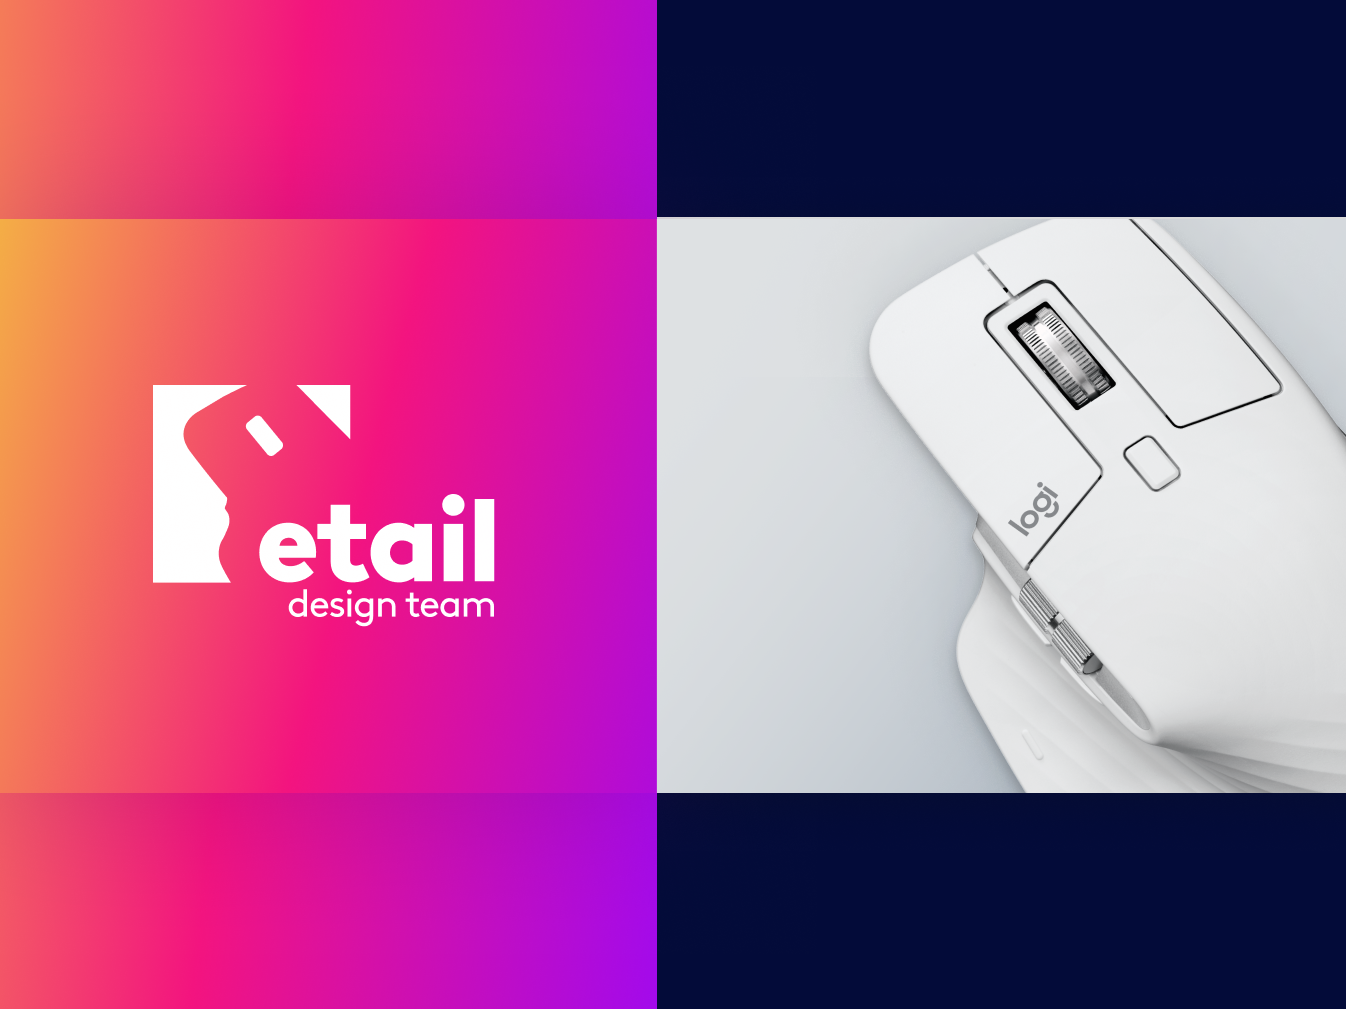 Etail Design Team Logo New Look By Viara On Dribbble 2707